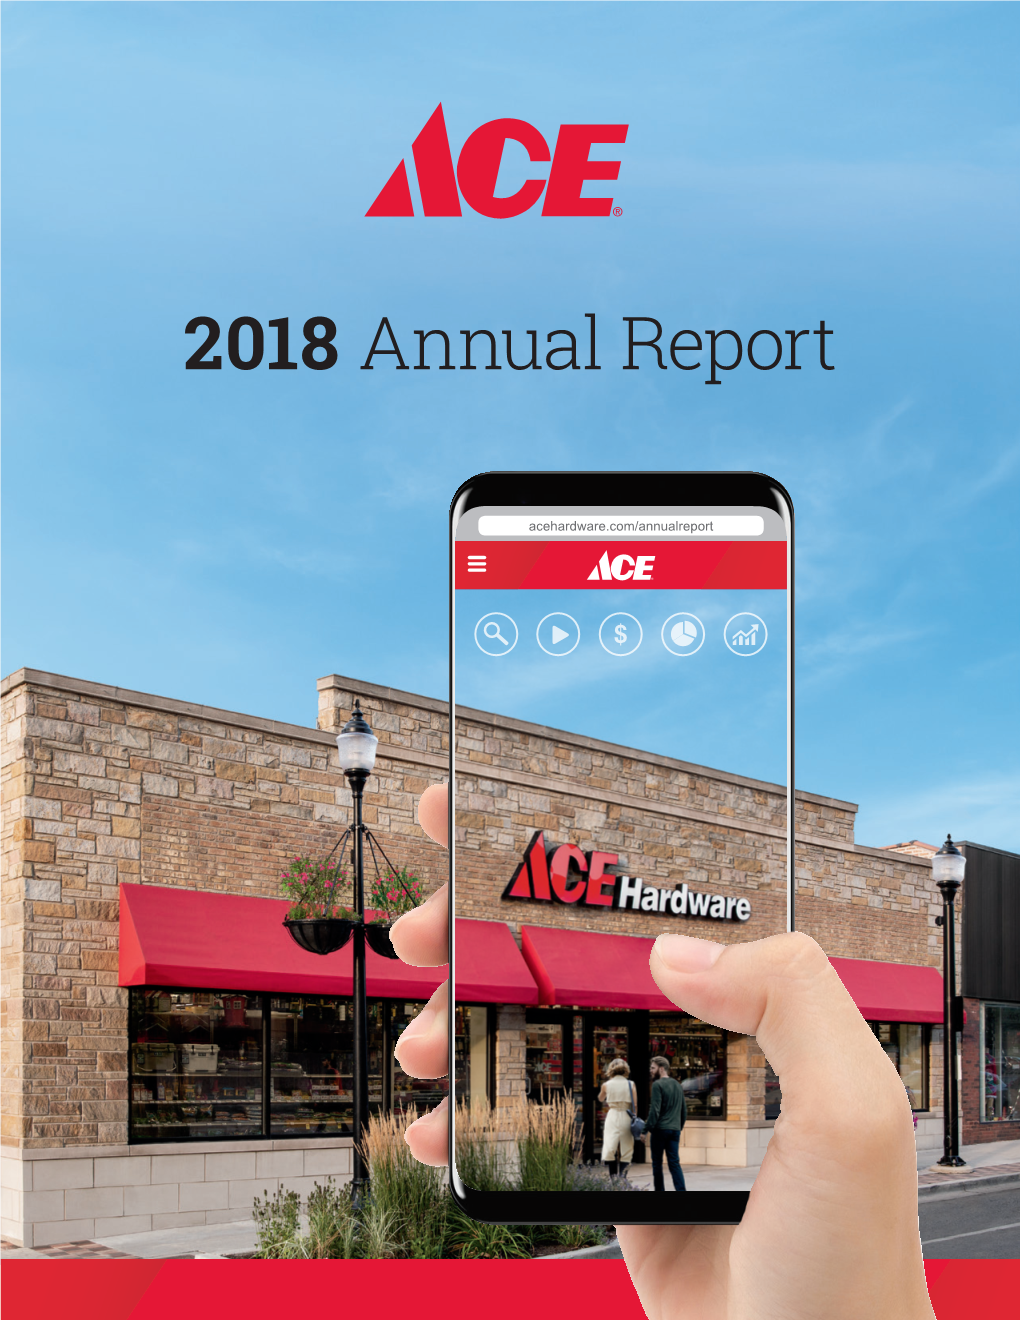 2018 Annual Report $$